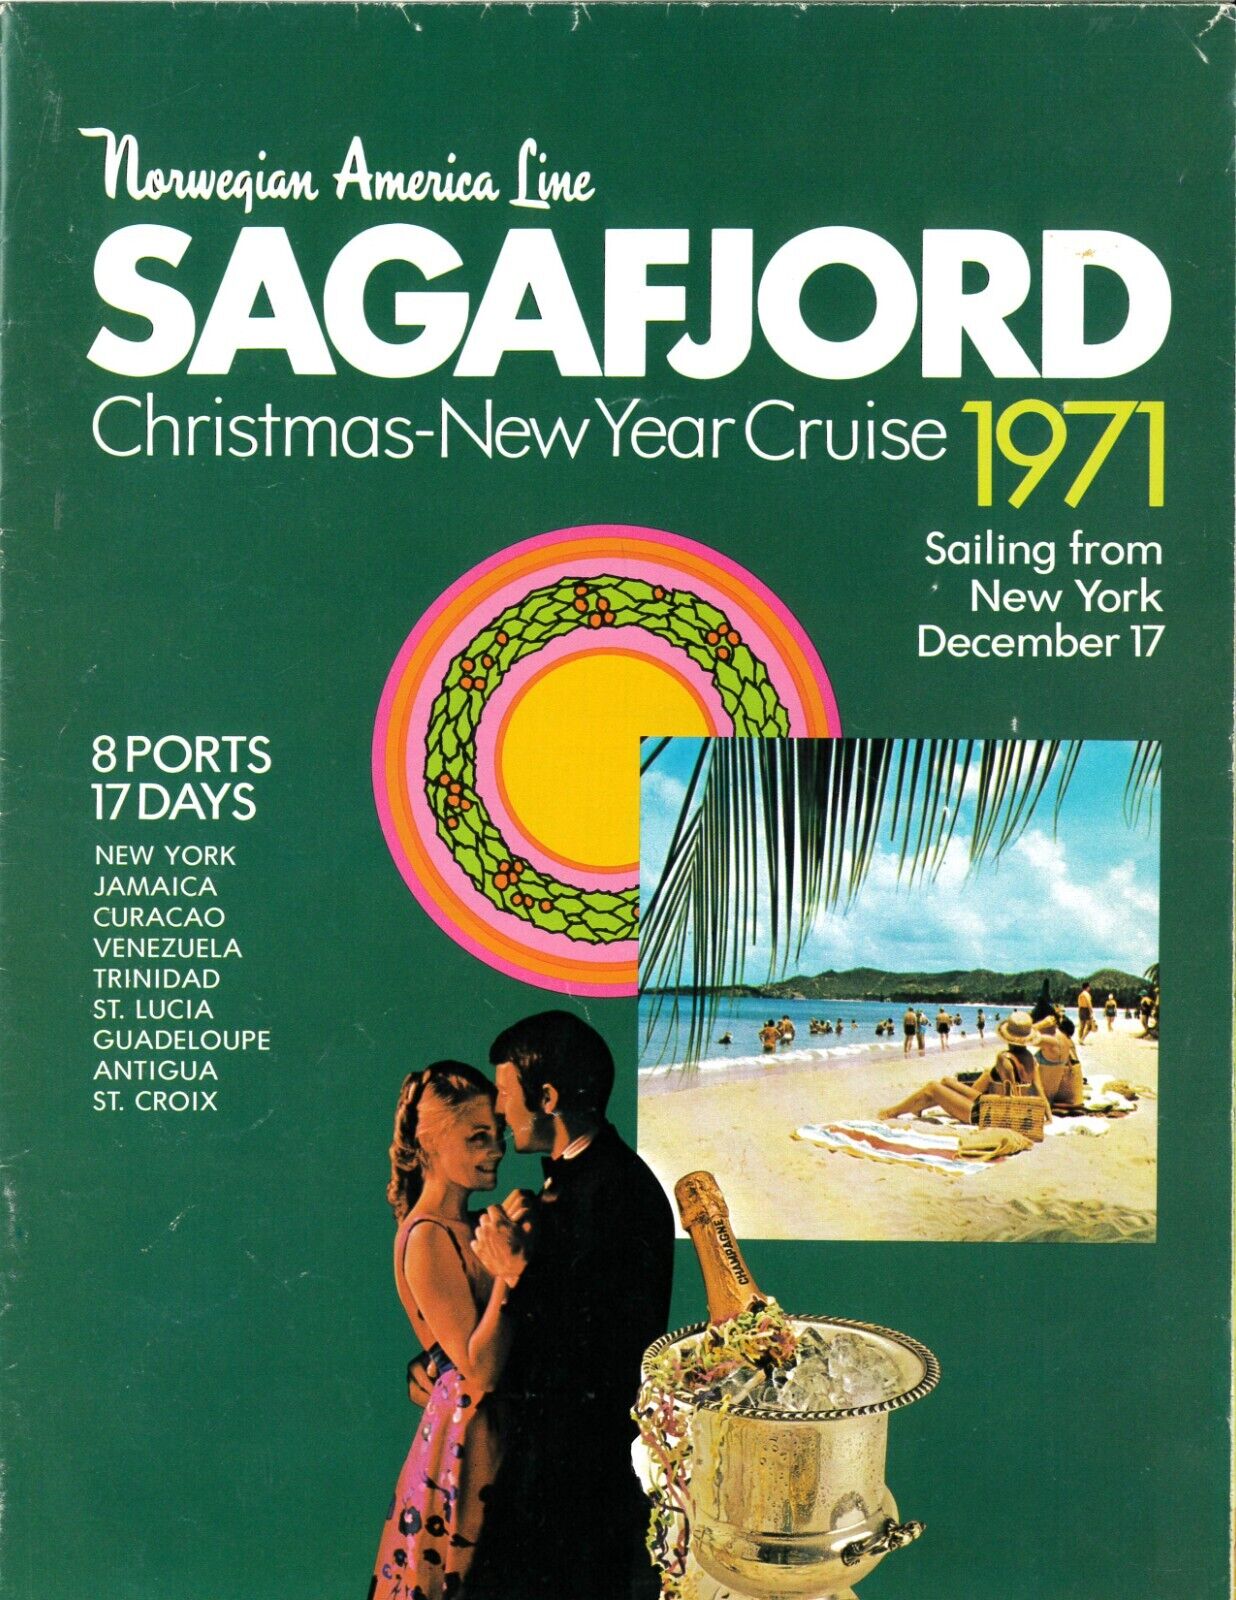 Norwegian America Line - Sagafjord -Christmas-New Year Cruise- 1971